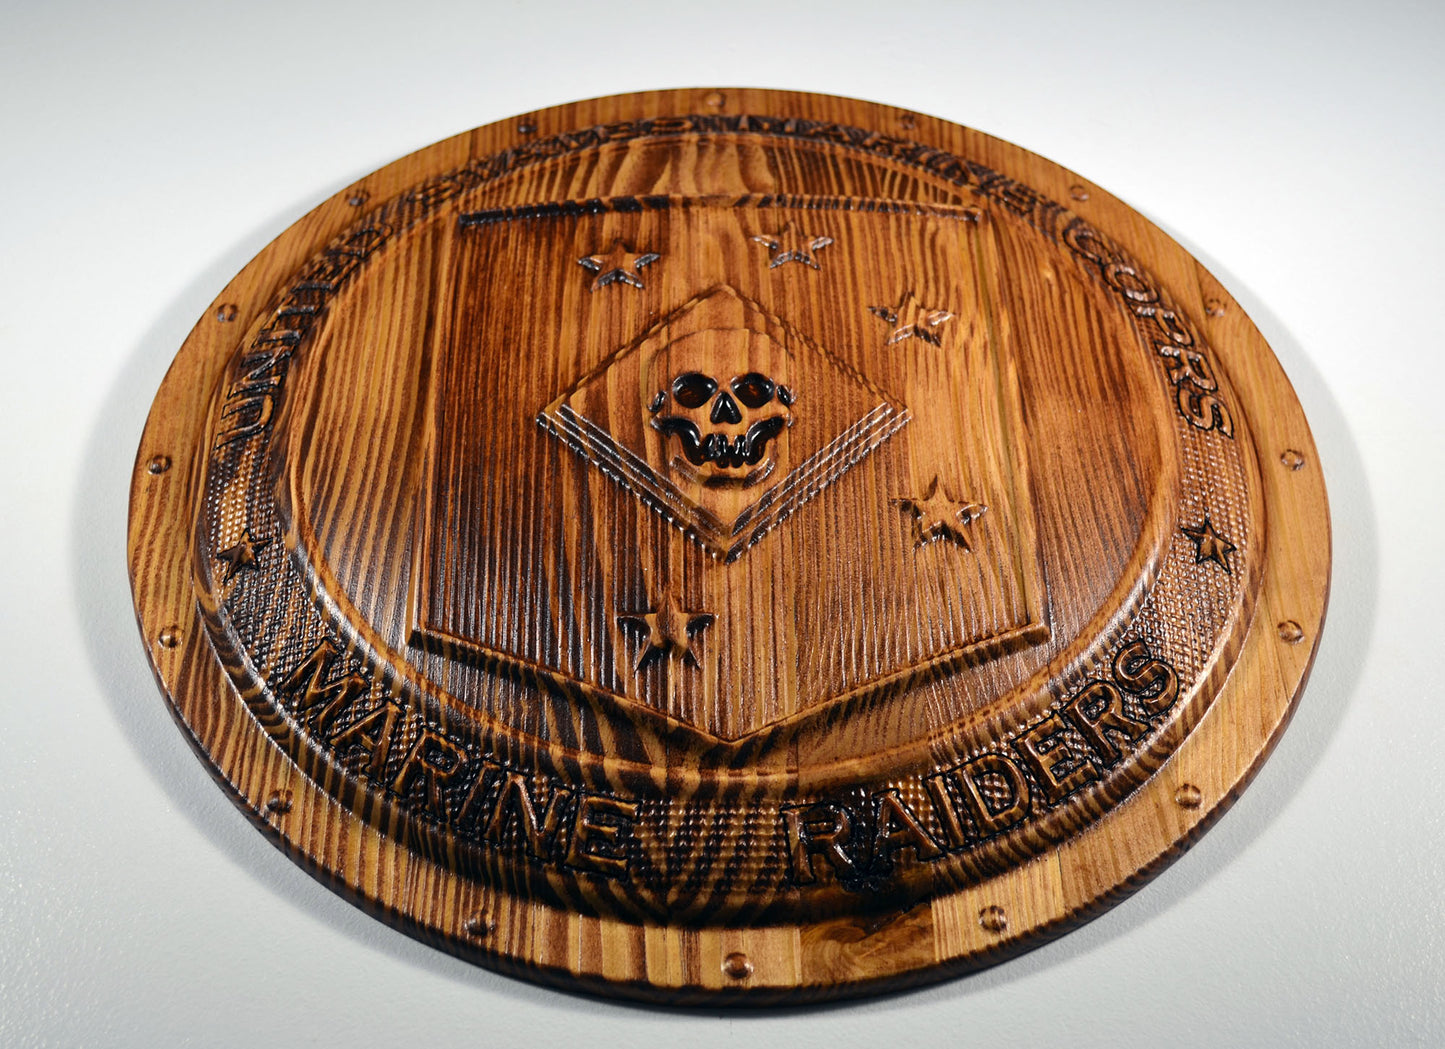 USMC Marine Raiders, Marine Special Operations Regiment, 3d CNC wood carving, military plaque